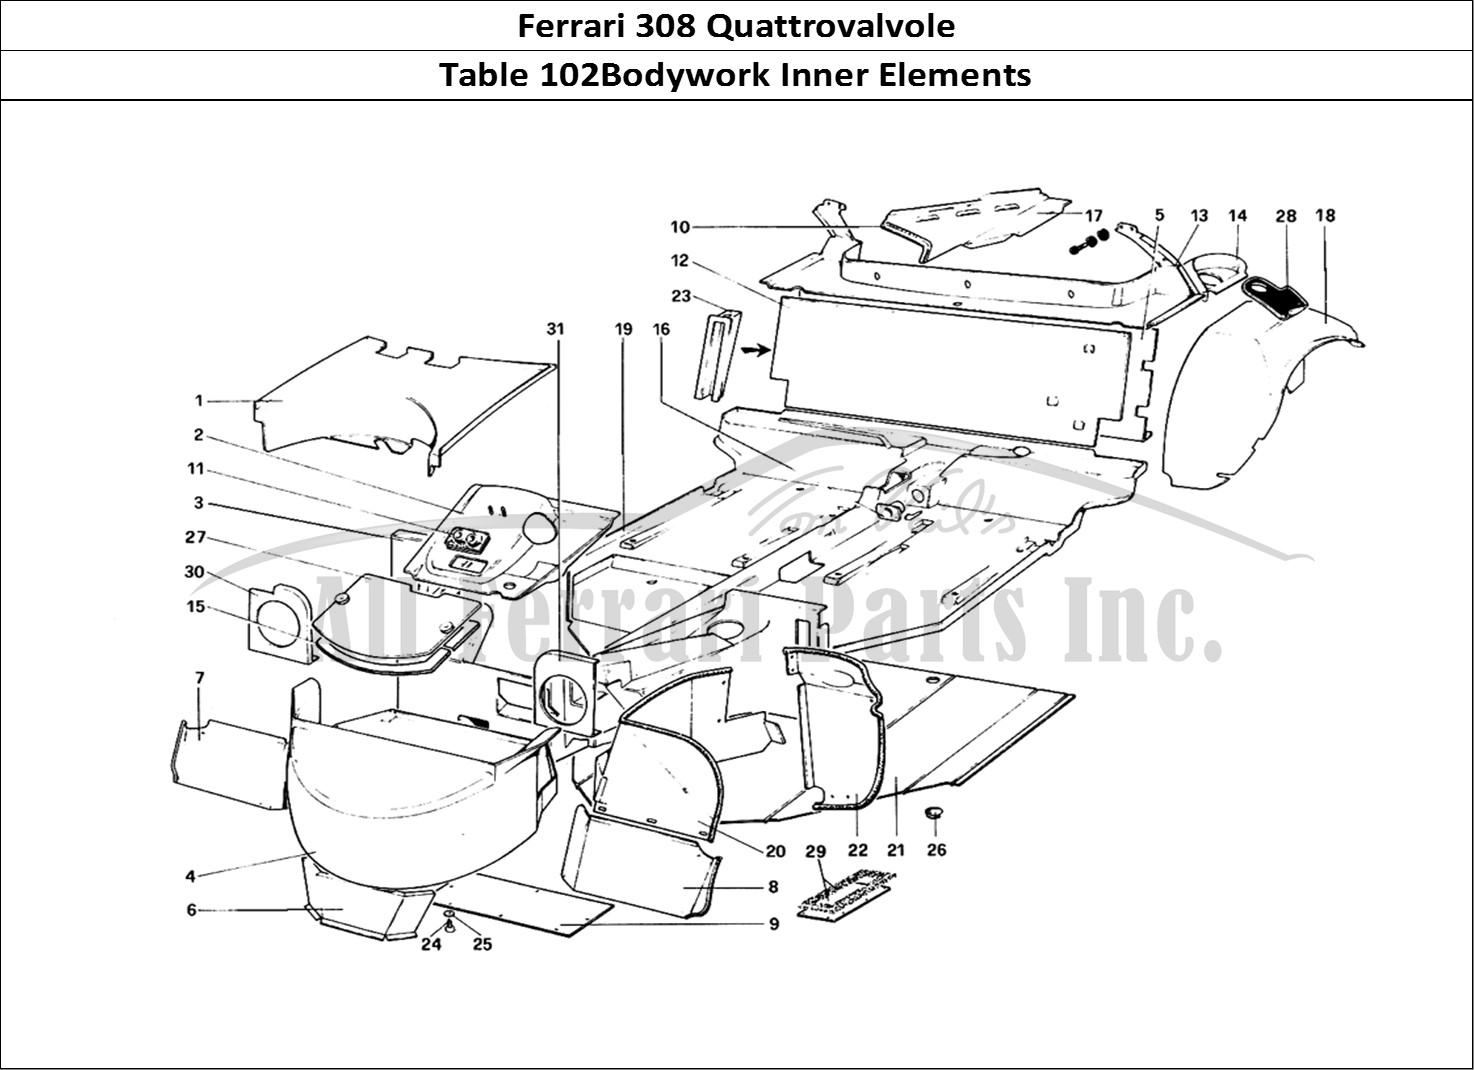 Ferrari Parts Ferrari 308 Quattrovalvole (1985) Page 102 Body Shell - Inner Elemen